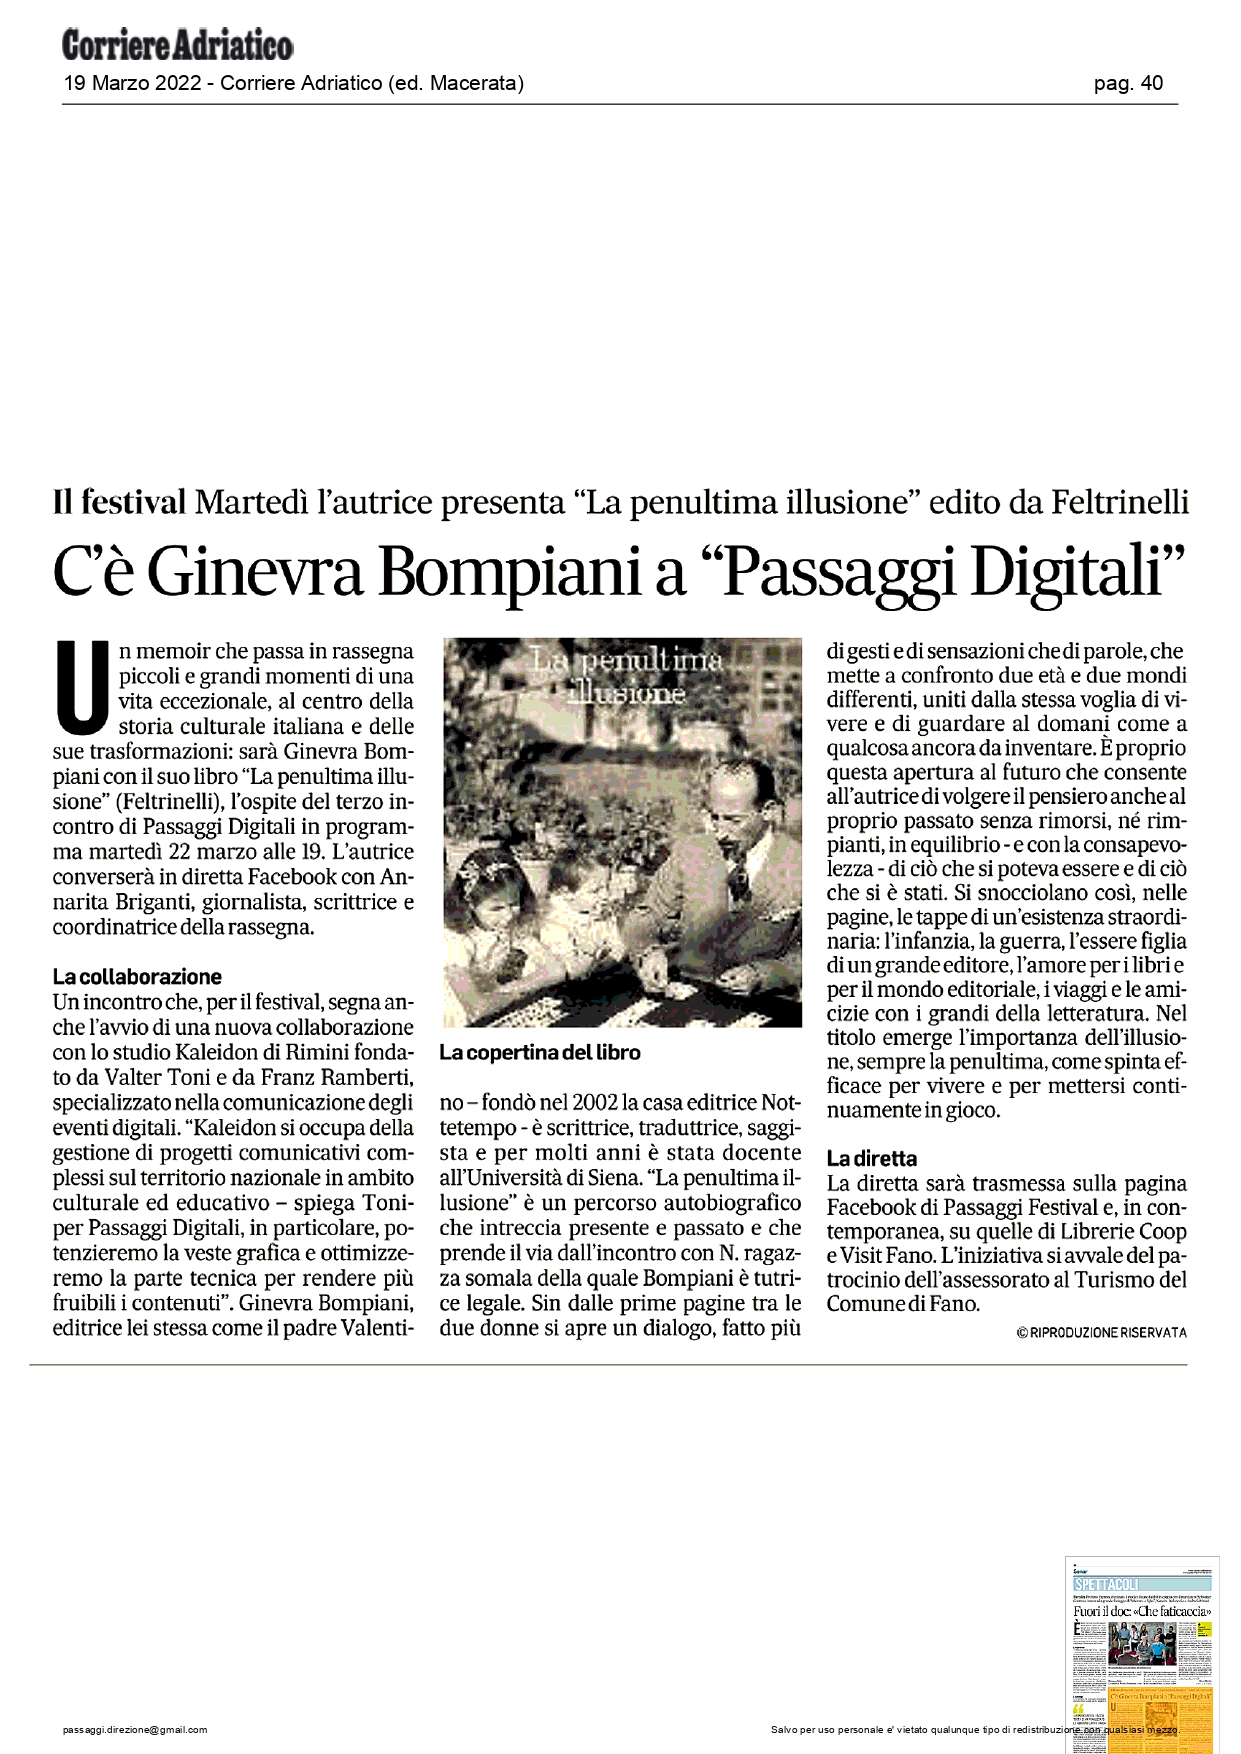 Corriere Adriatico- C'è Ginevra Bompiani a Passaggi Digitali